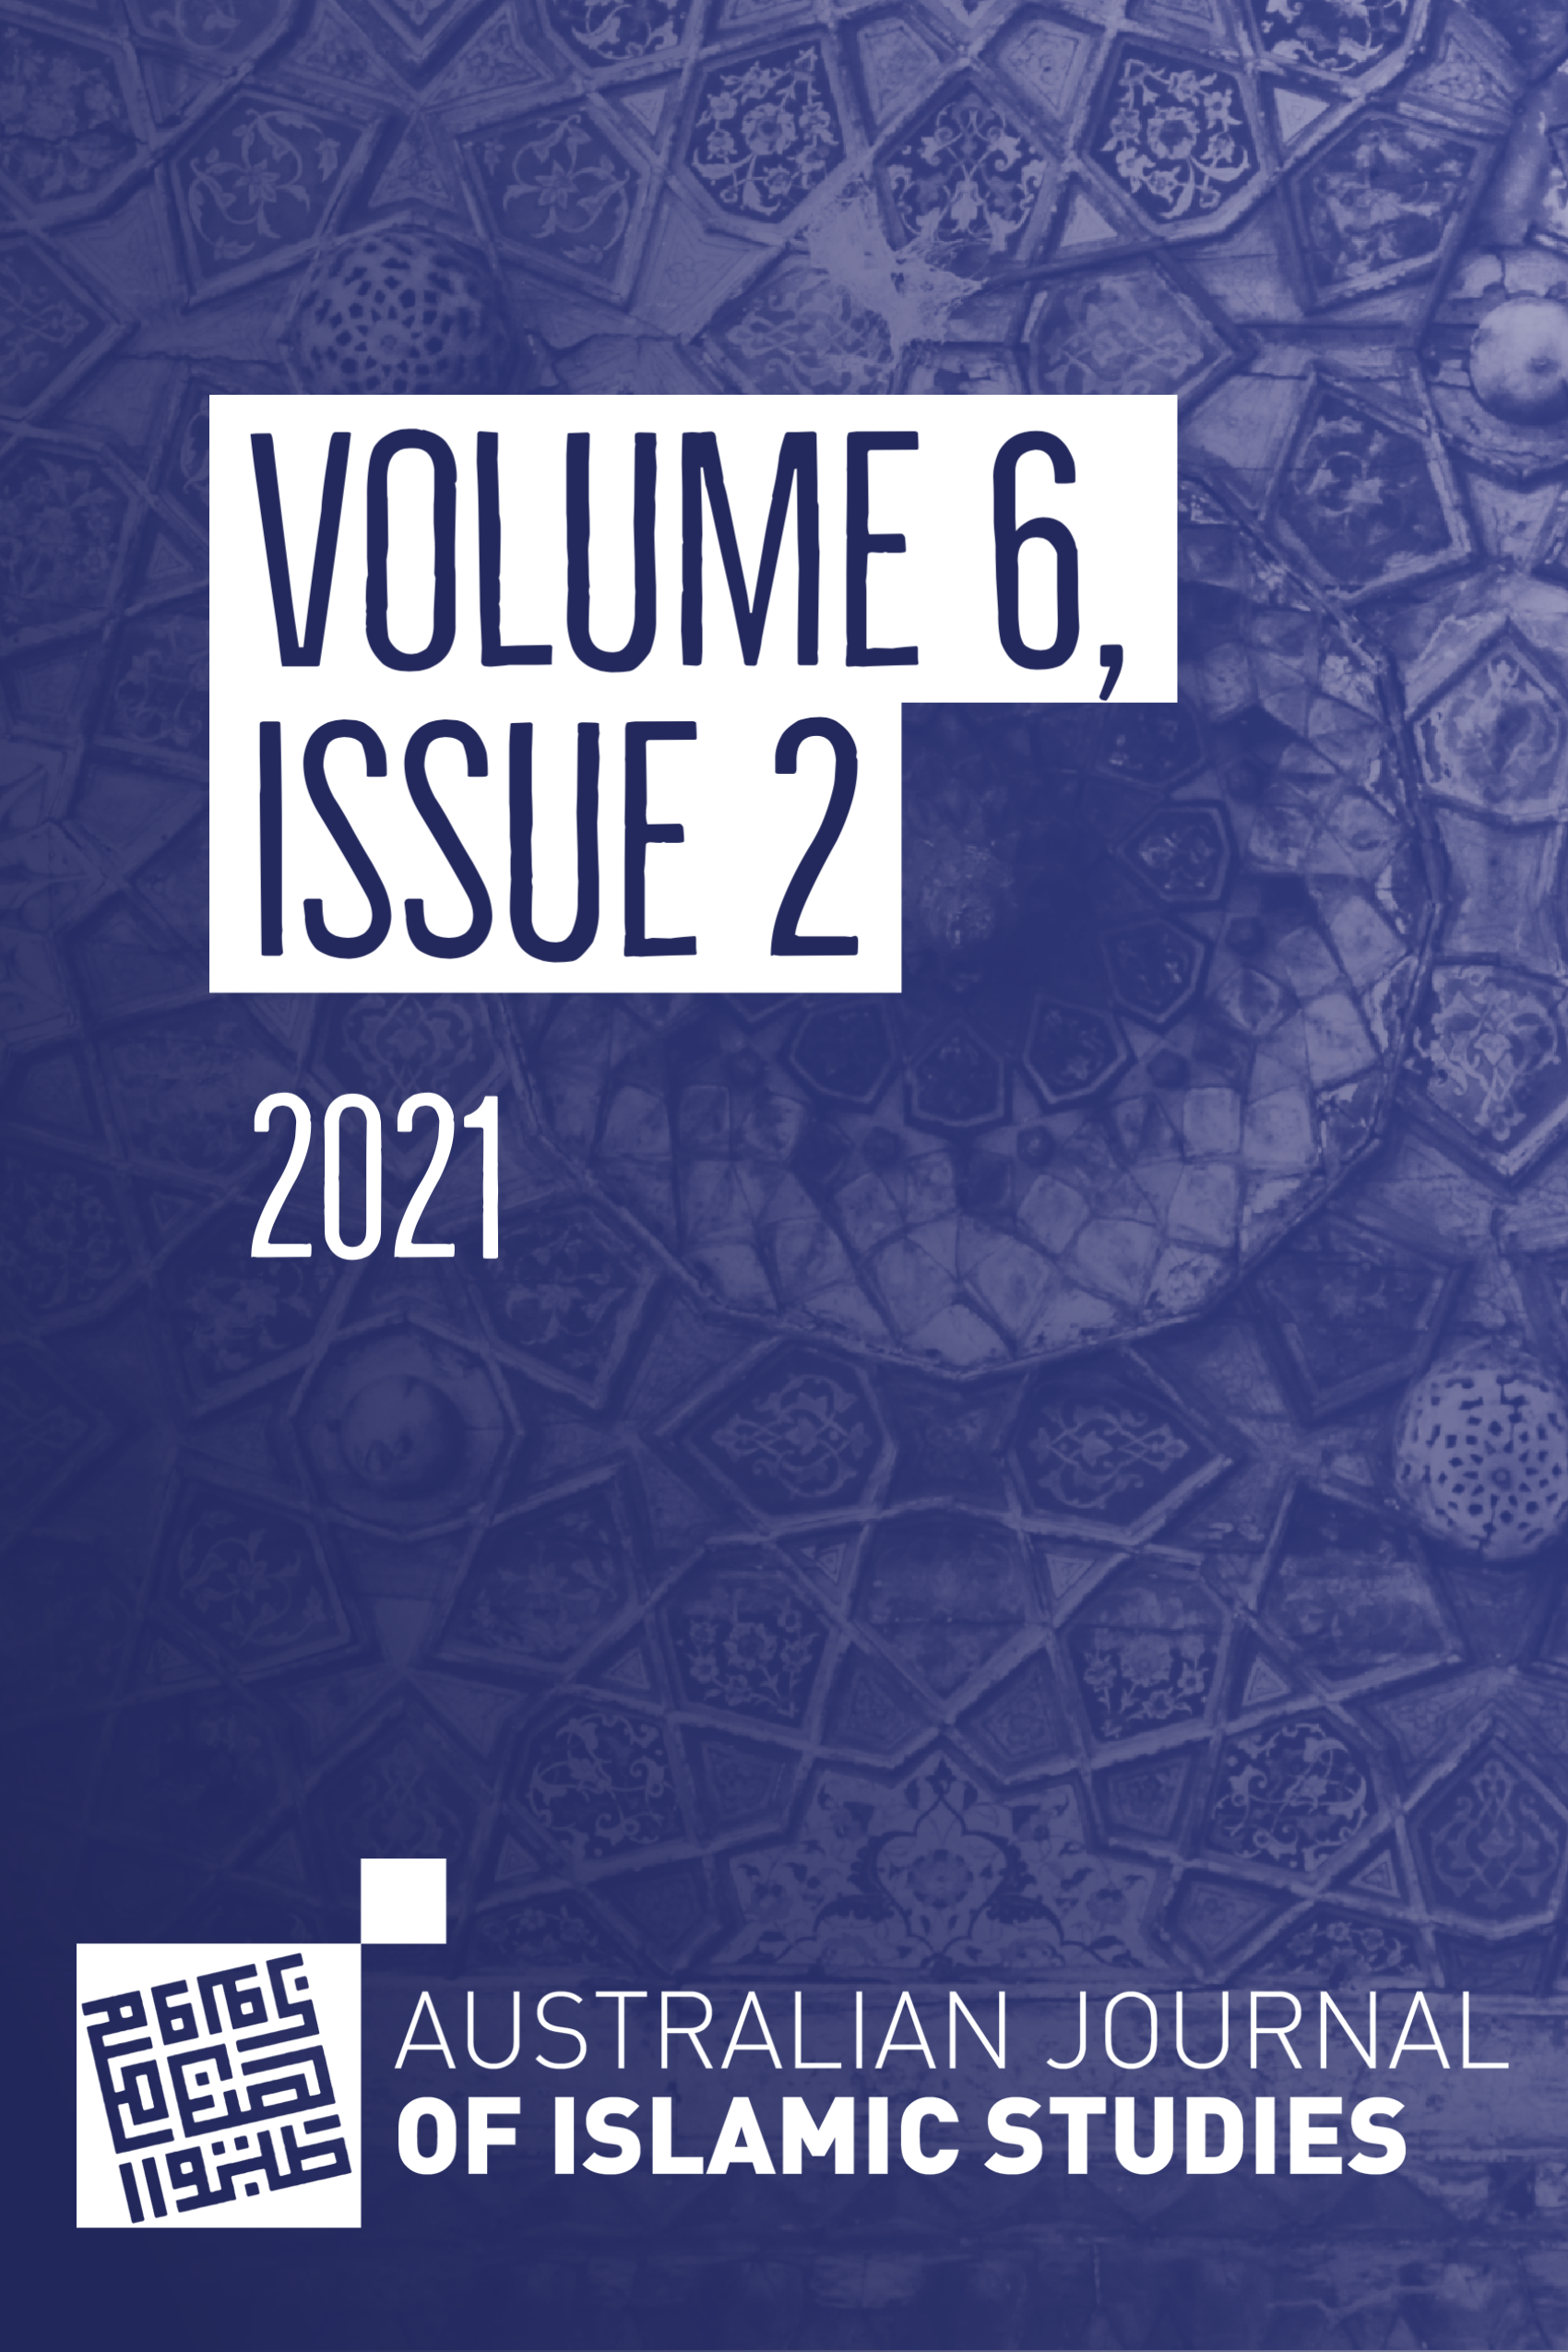 Australian Journal of Islamic Studies